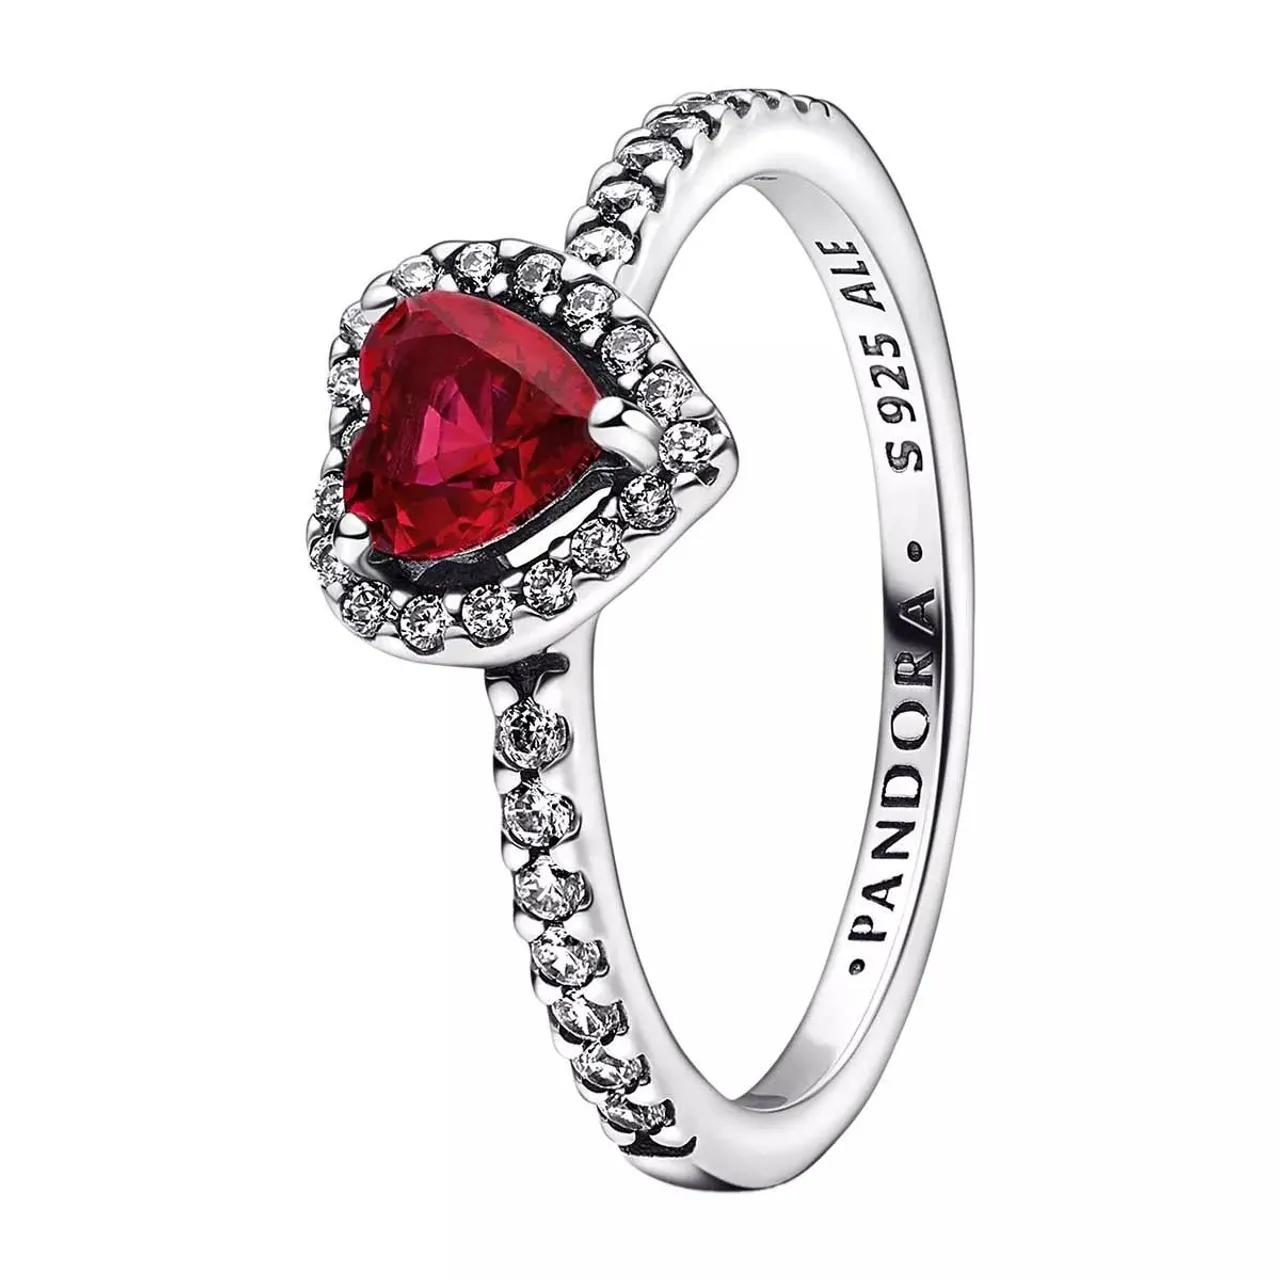 Pandora Rings - Heart sterling silver ring with cherries jubilee - silver - Rings for ladies